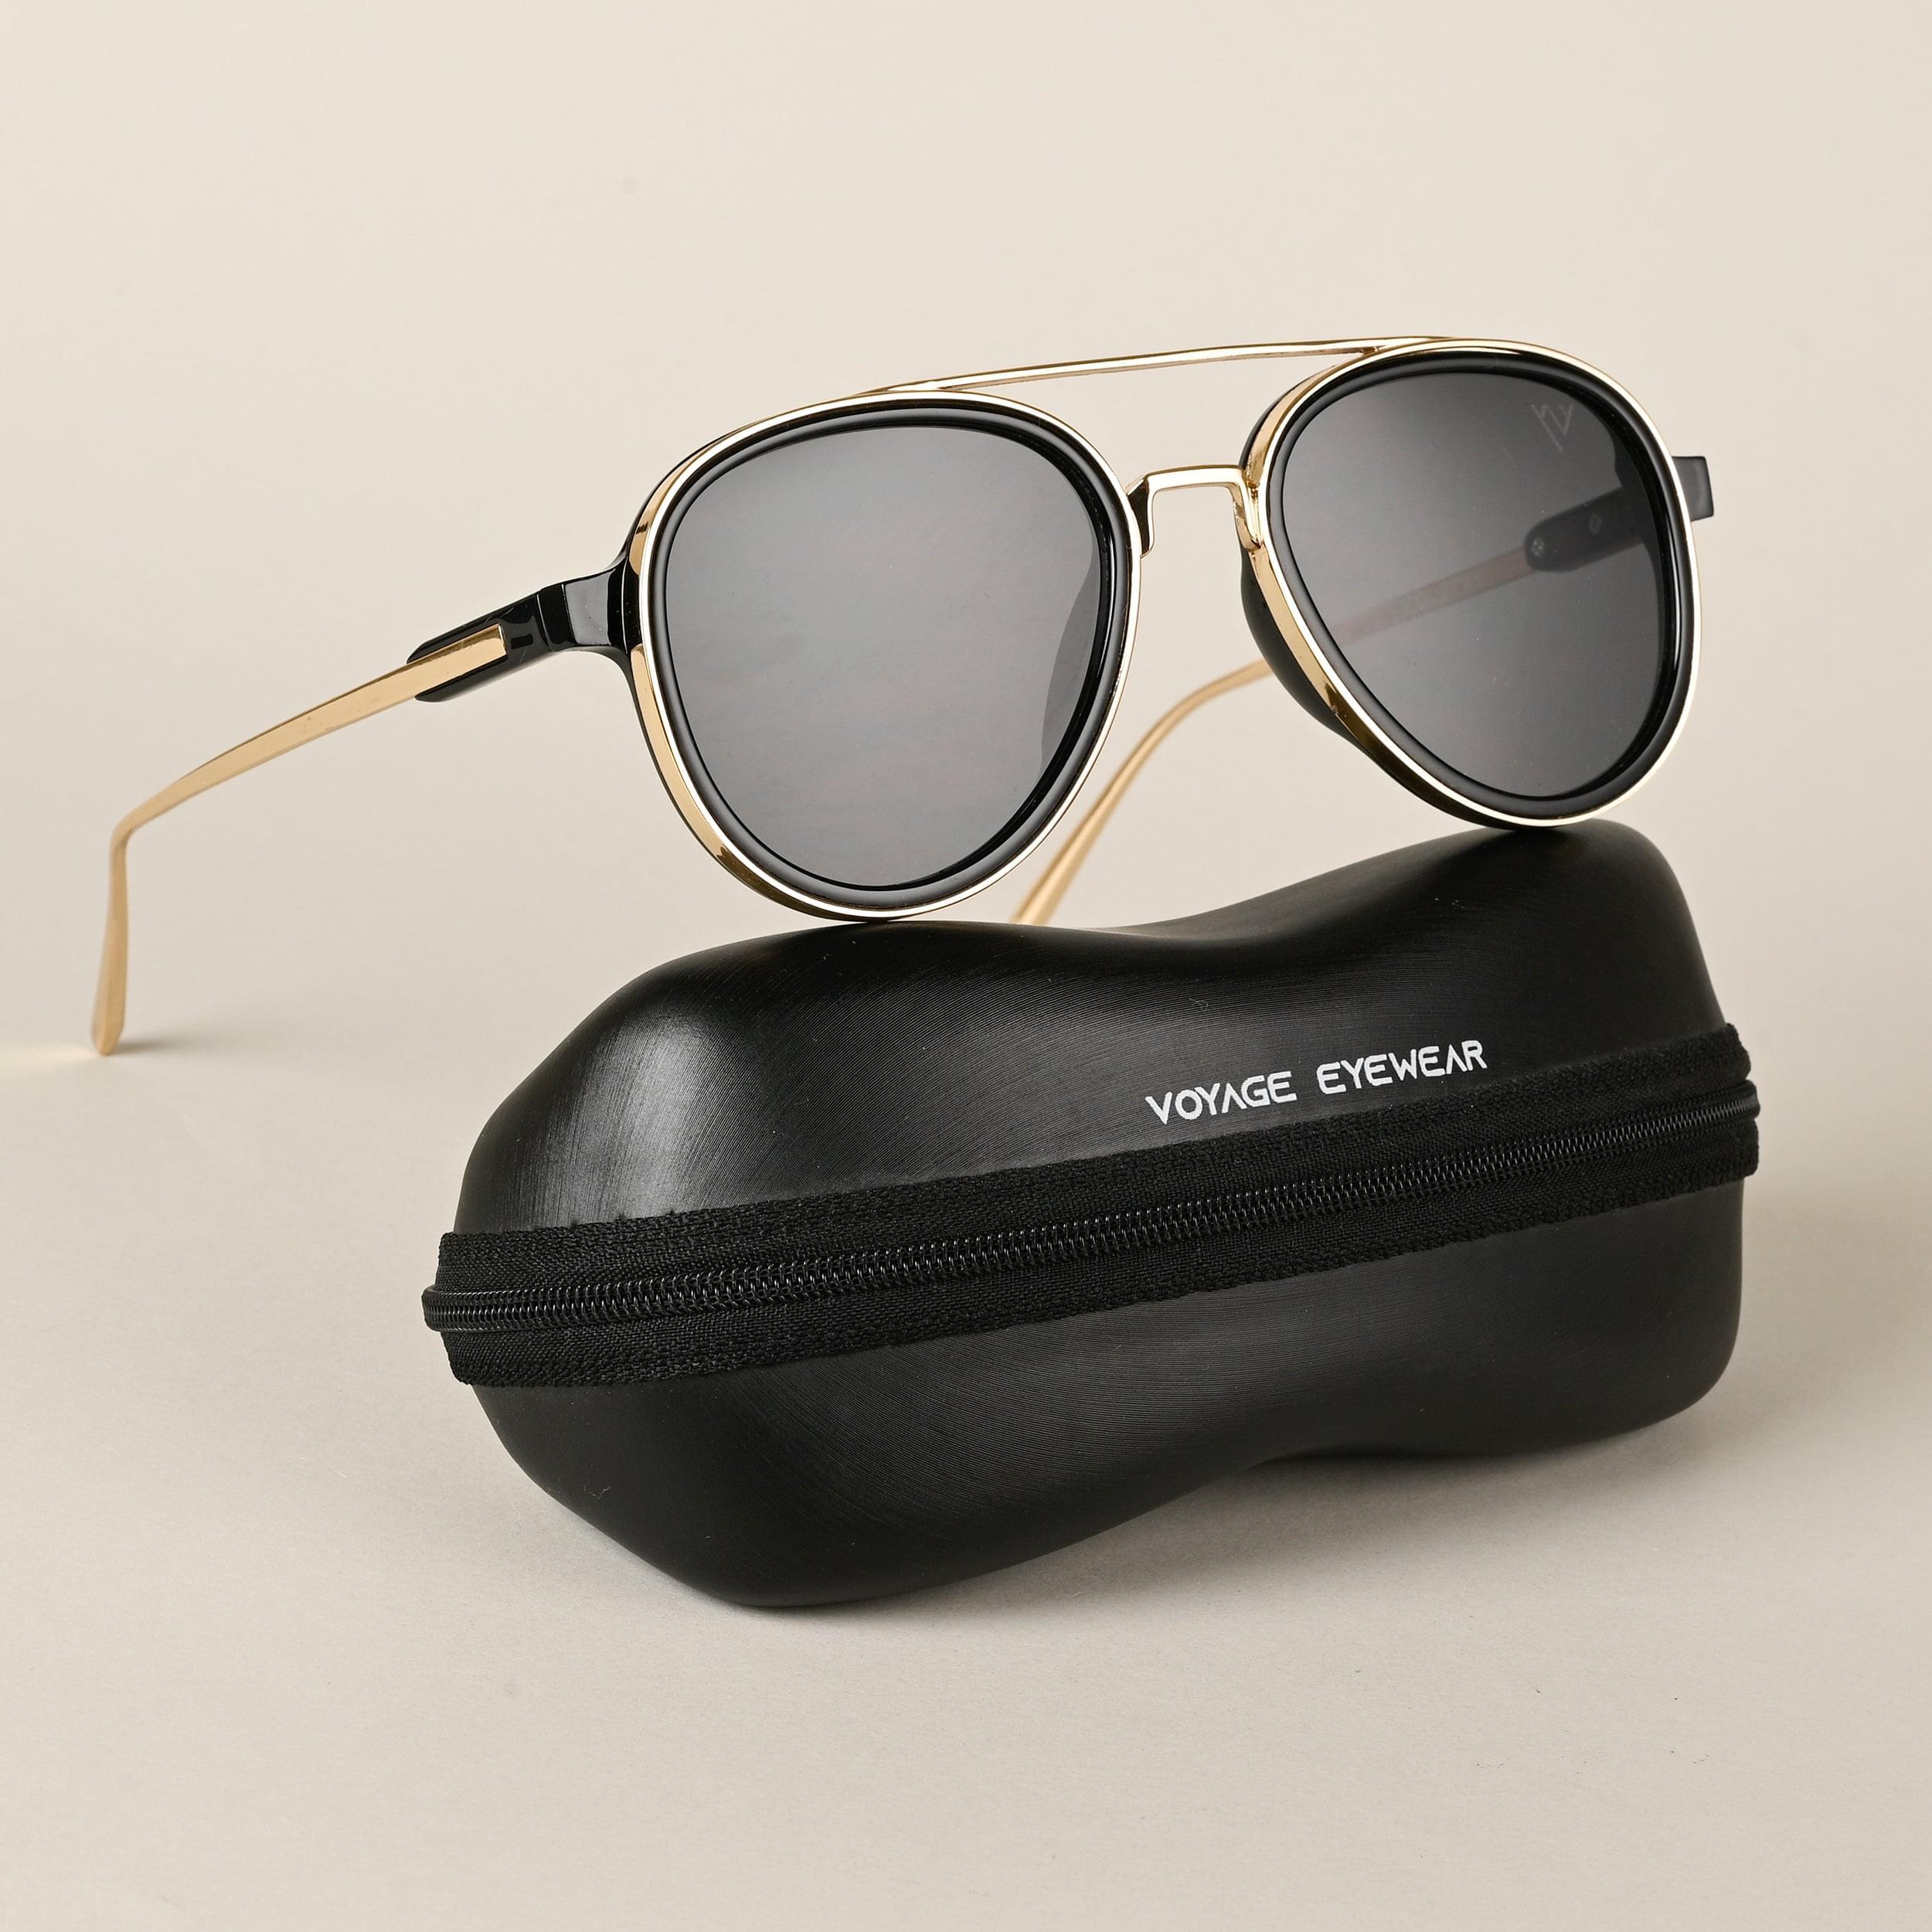 Voyage Black Aviator Sunglasses for Men & Women - MG4215